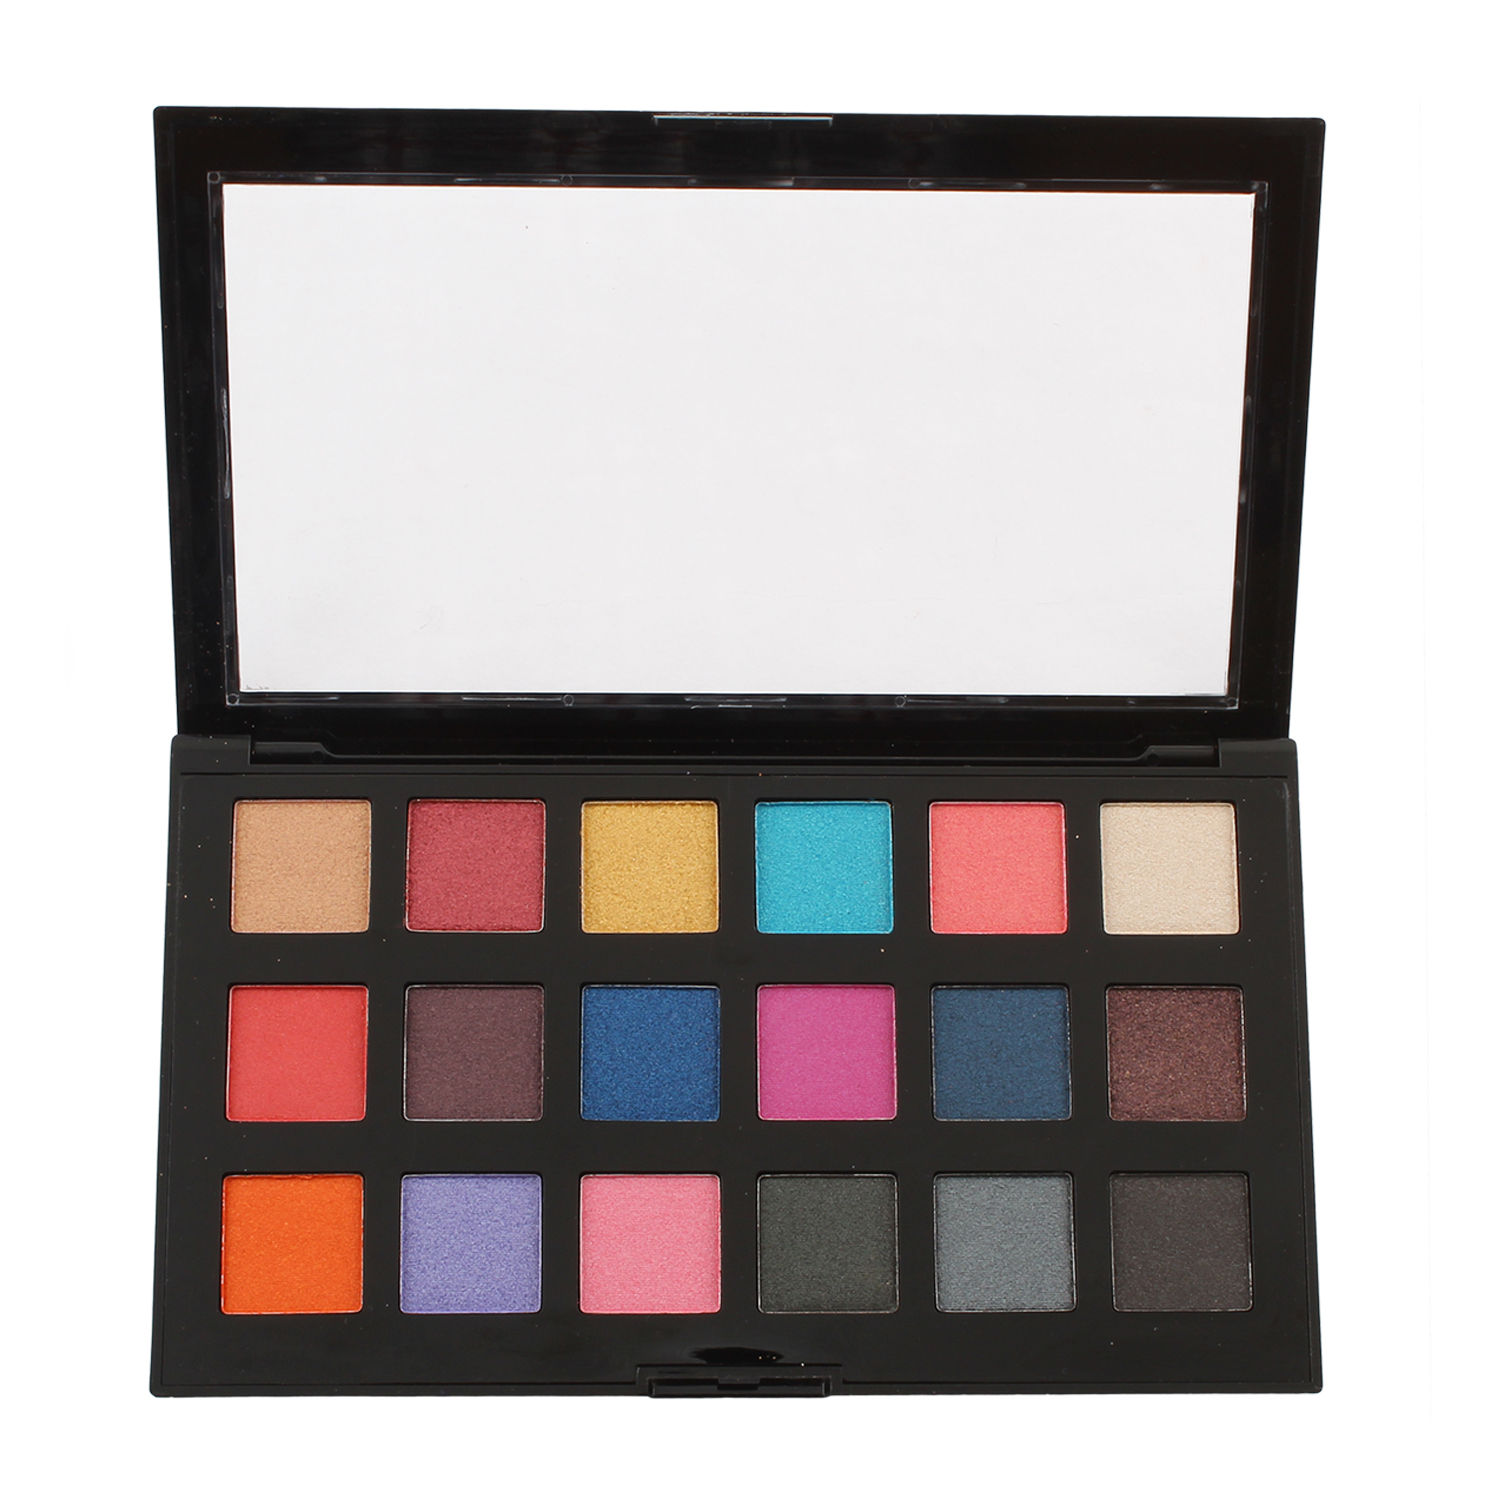 Buy Swiss Beauty 18 Color Textured Eyeshadow Palette - Multi-03 (20 g) - Purplle